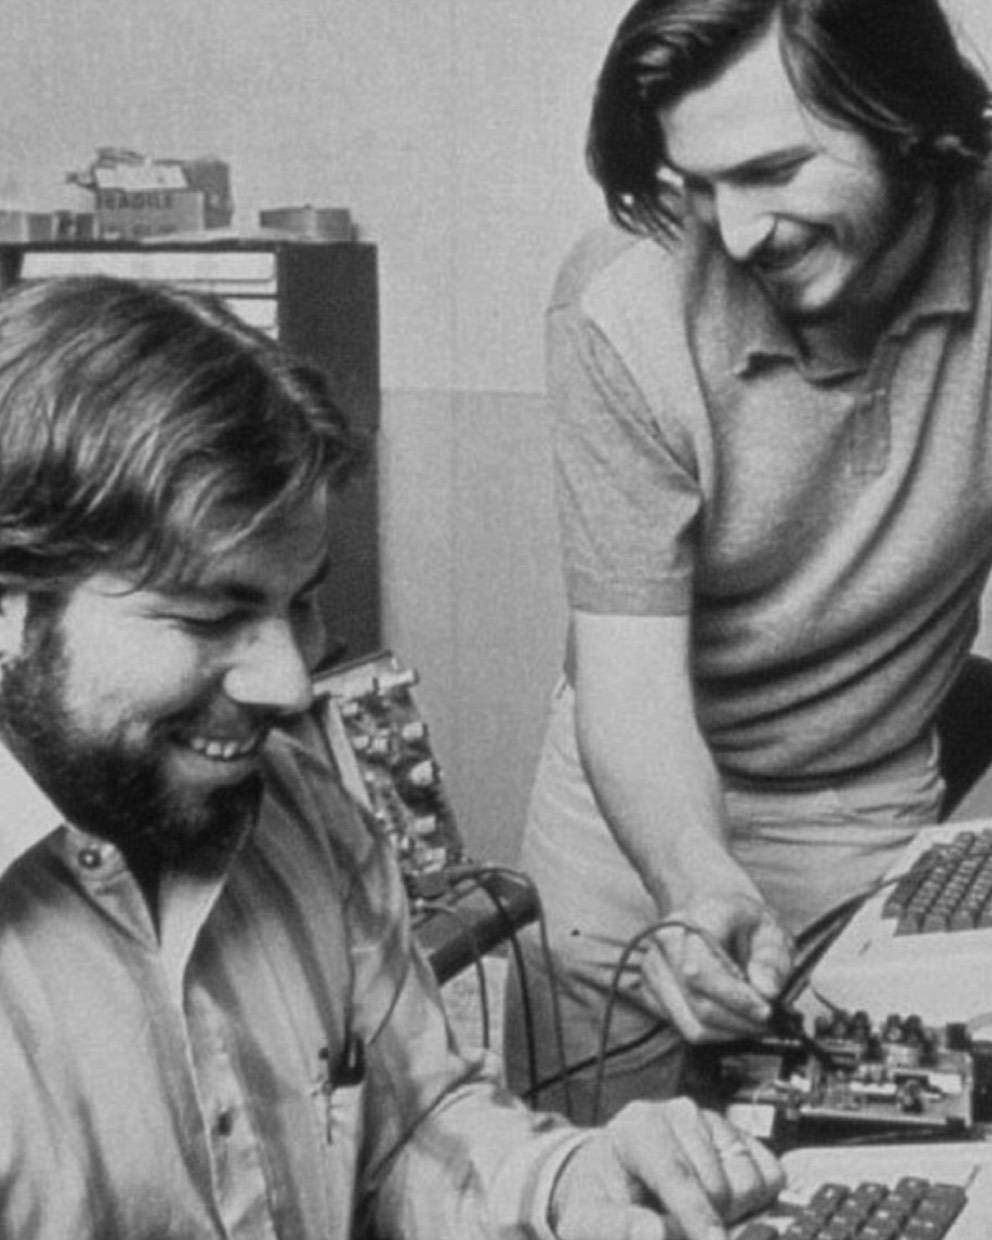 Jungesteve Jobs Und Steve Wozniak In Graustufen Wallpaper